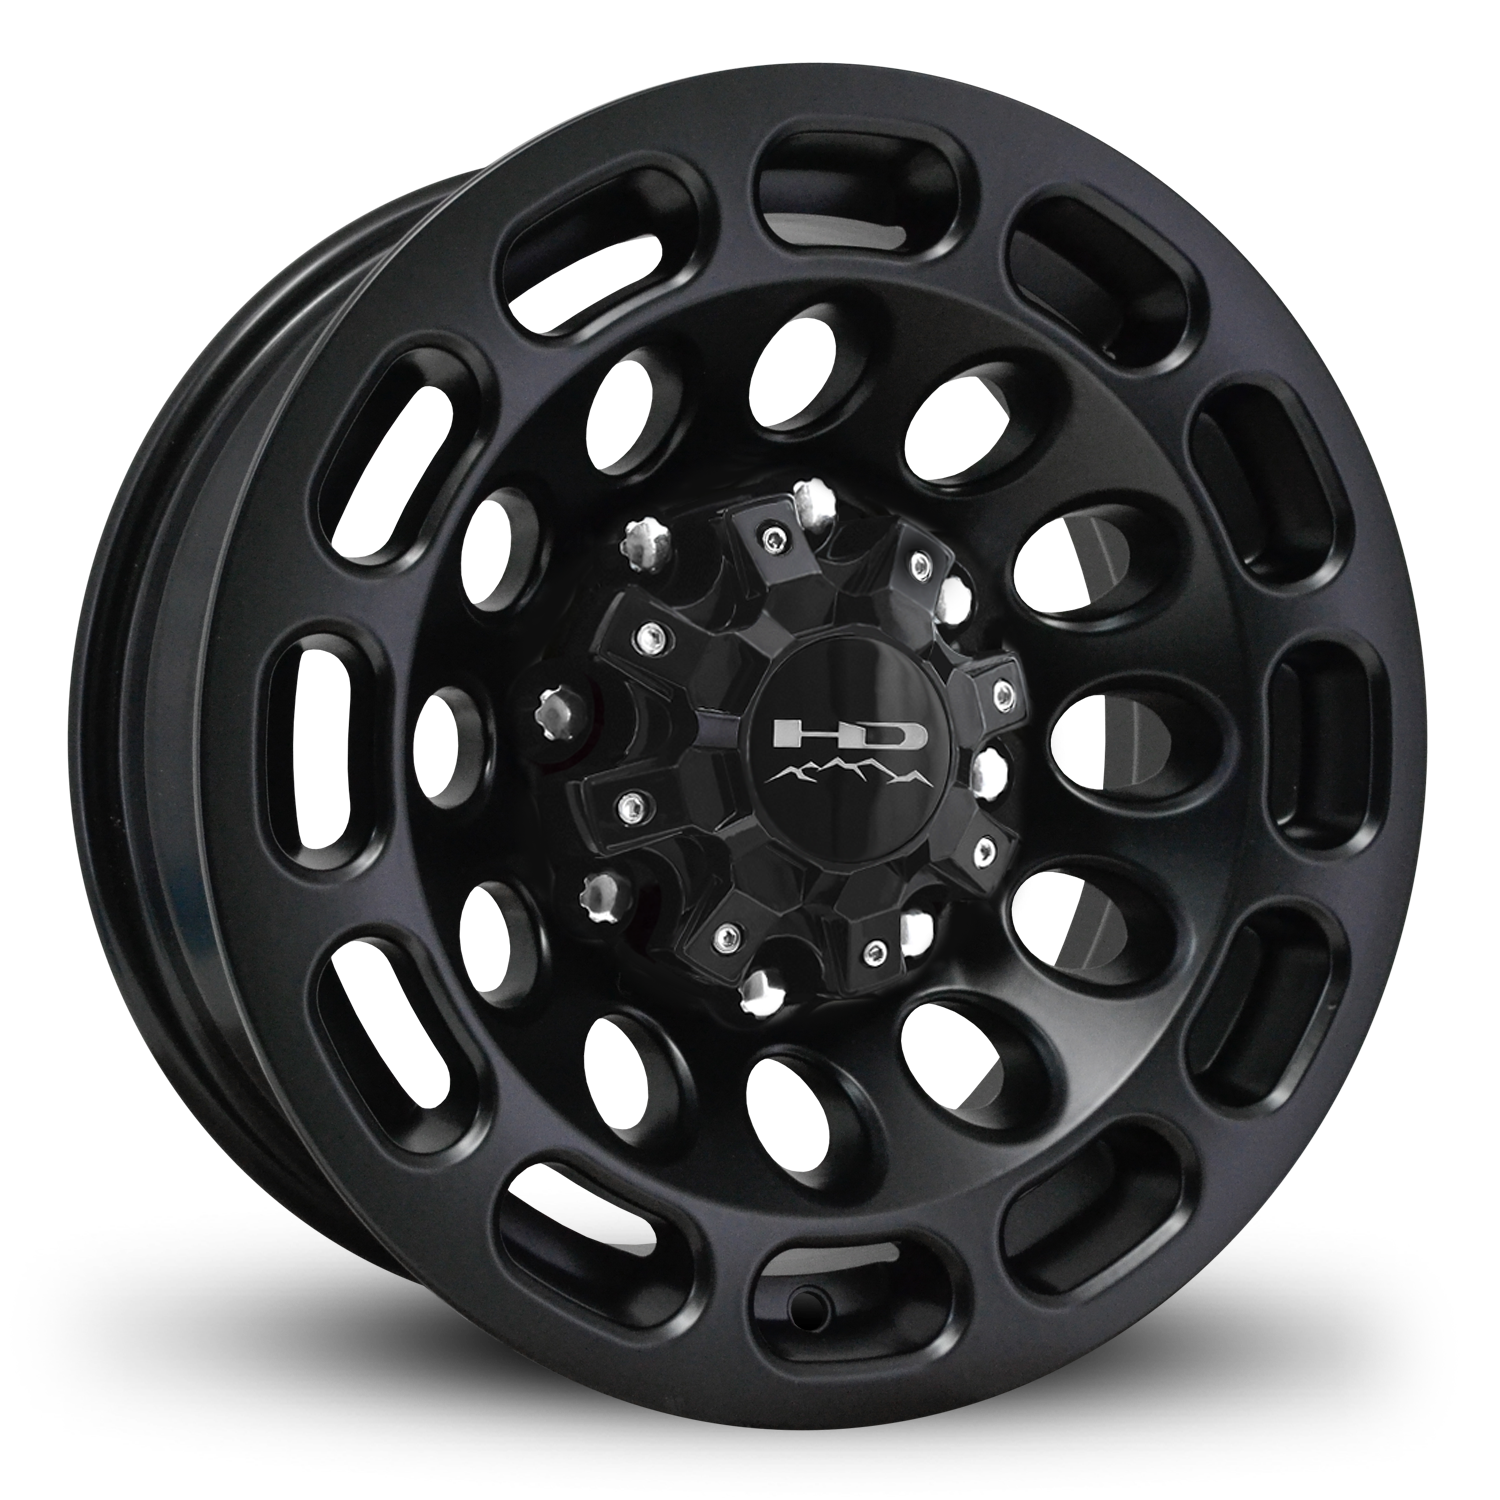 HD Off-Road Road Warrior Custom Trailer Wheels in 16x6.0 in 8 lug All Satin Black for Unility, Boat, Car, Construction, Horse, & RV